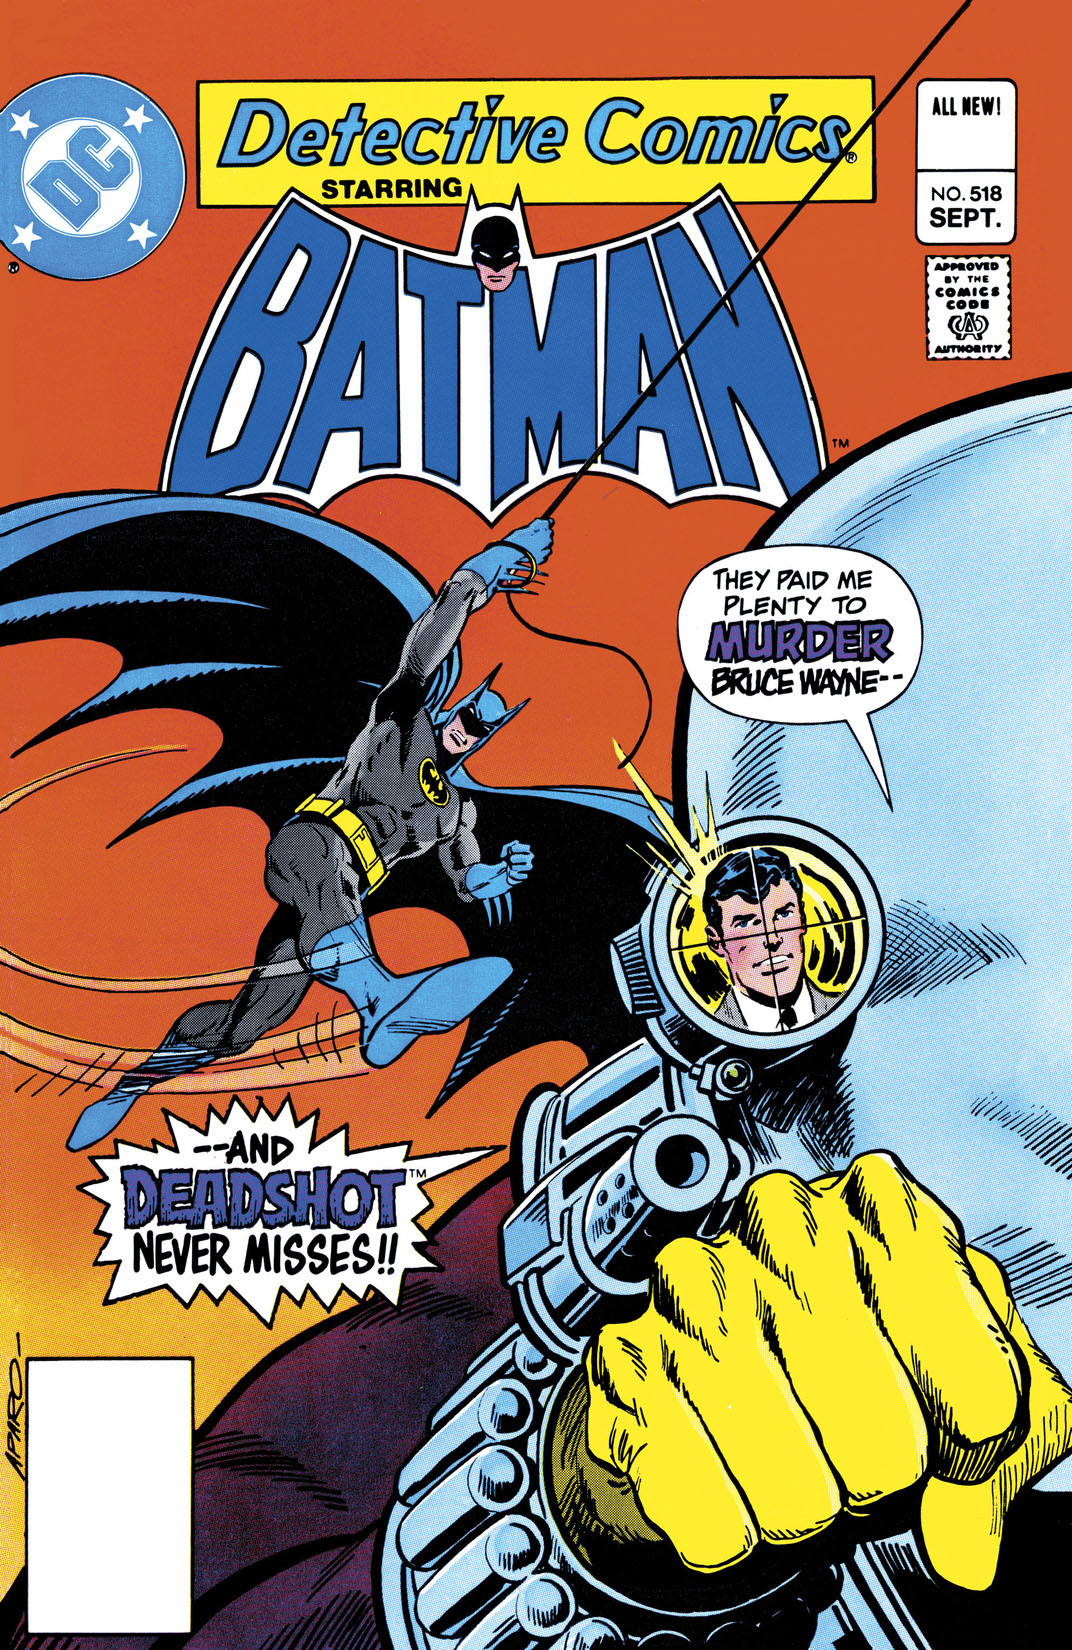 Detective Comics (1937-) #518 preview images